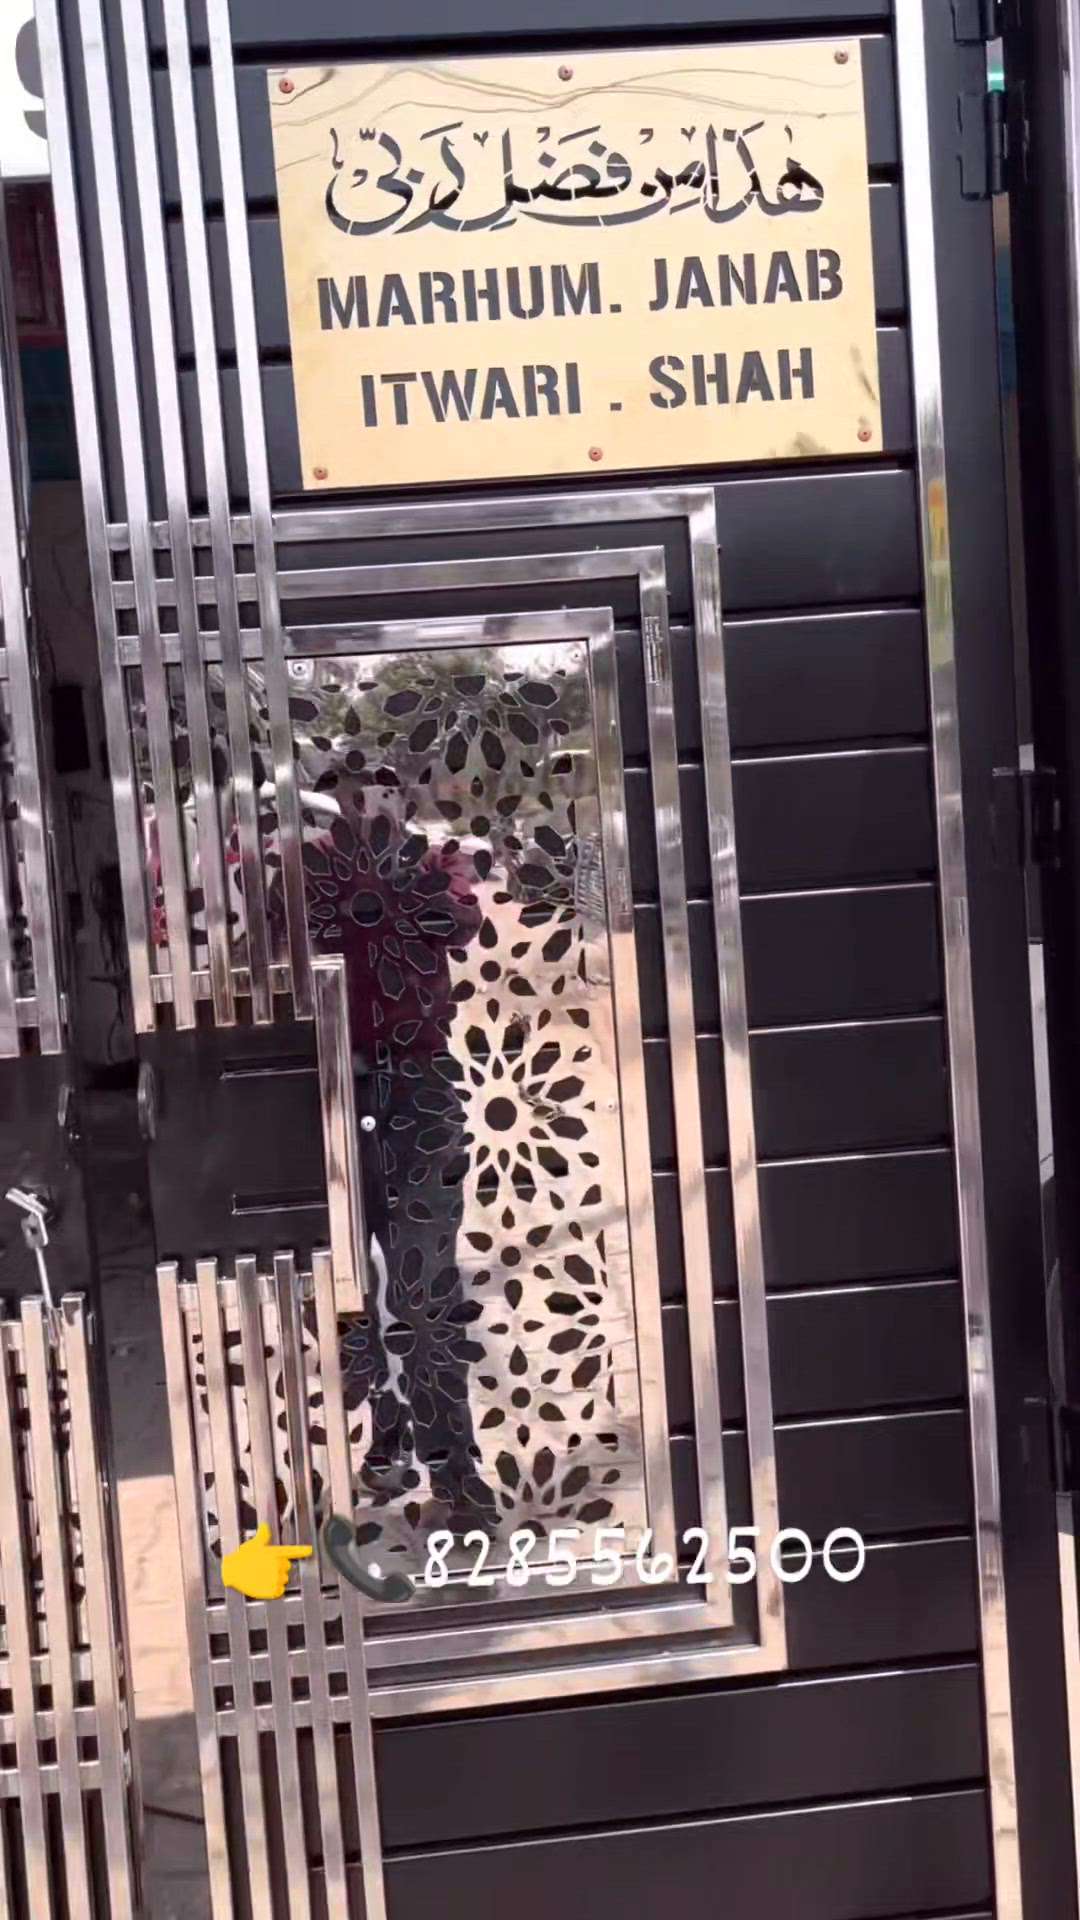 iron man gate design 🏡😍 welding work
welding ke kaam ke liye sampark kare Bismillahfabrication welding work Delhi
.
.
.
.#koloapp  #kolodesign  #kolotrending  #intrestgatedesing  #saftydoor  #irondoor  #ironwork  #InteriorDesigner  #homedecor  #weldingwork  #welder  #weldingfabrication  #bismillahfabricationweldingwork  #explore  #reels  #kolovideo  #koloreels  #koloviral  #kolotrrnd  #kolotrendingvideo  #kolotrendingpost